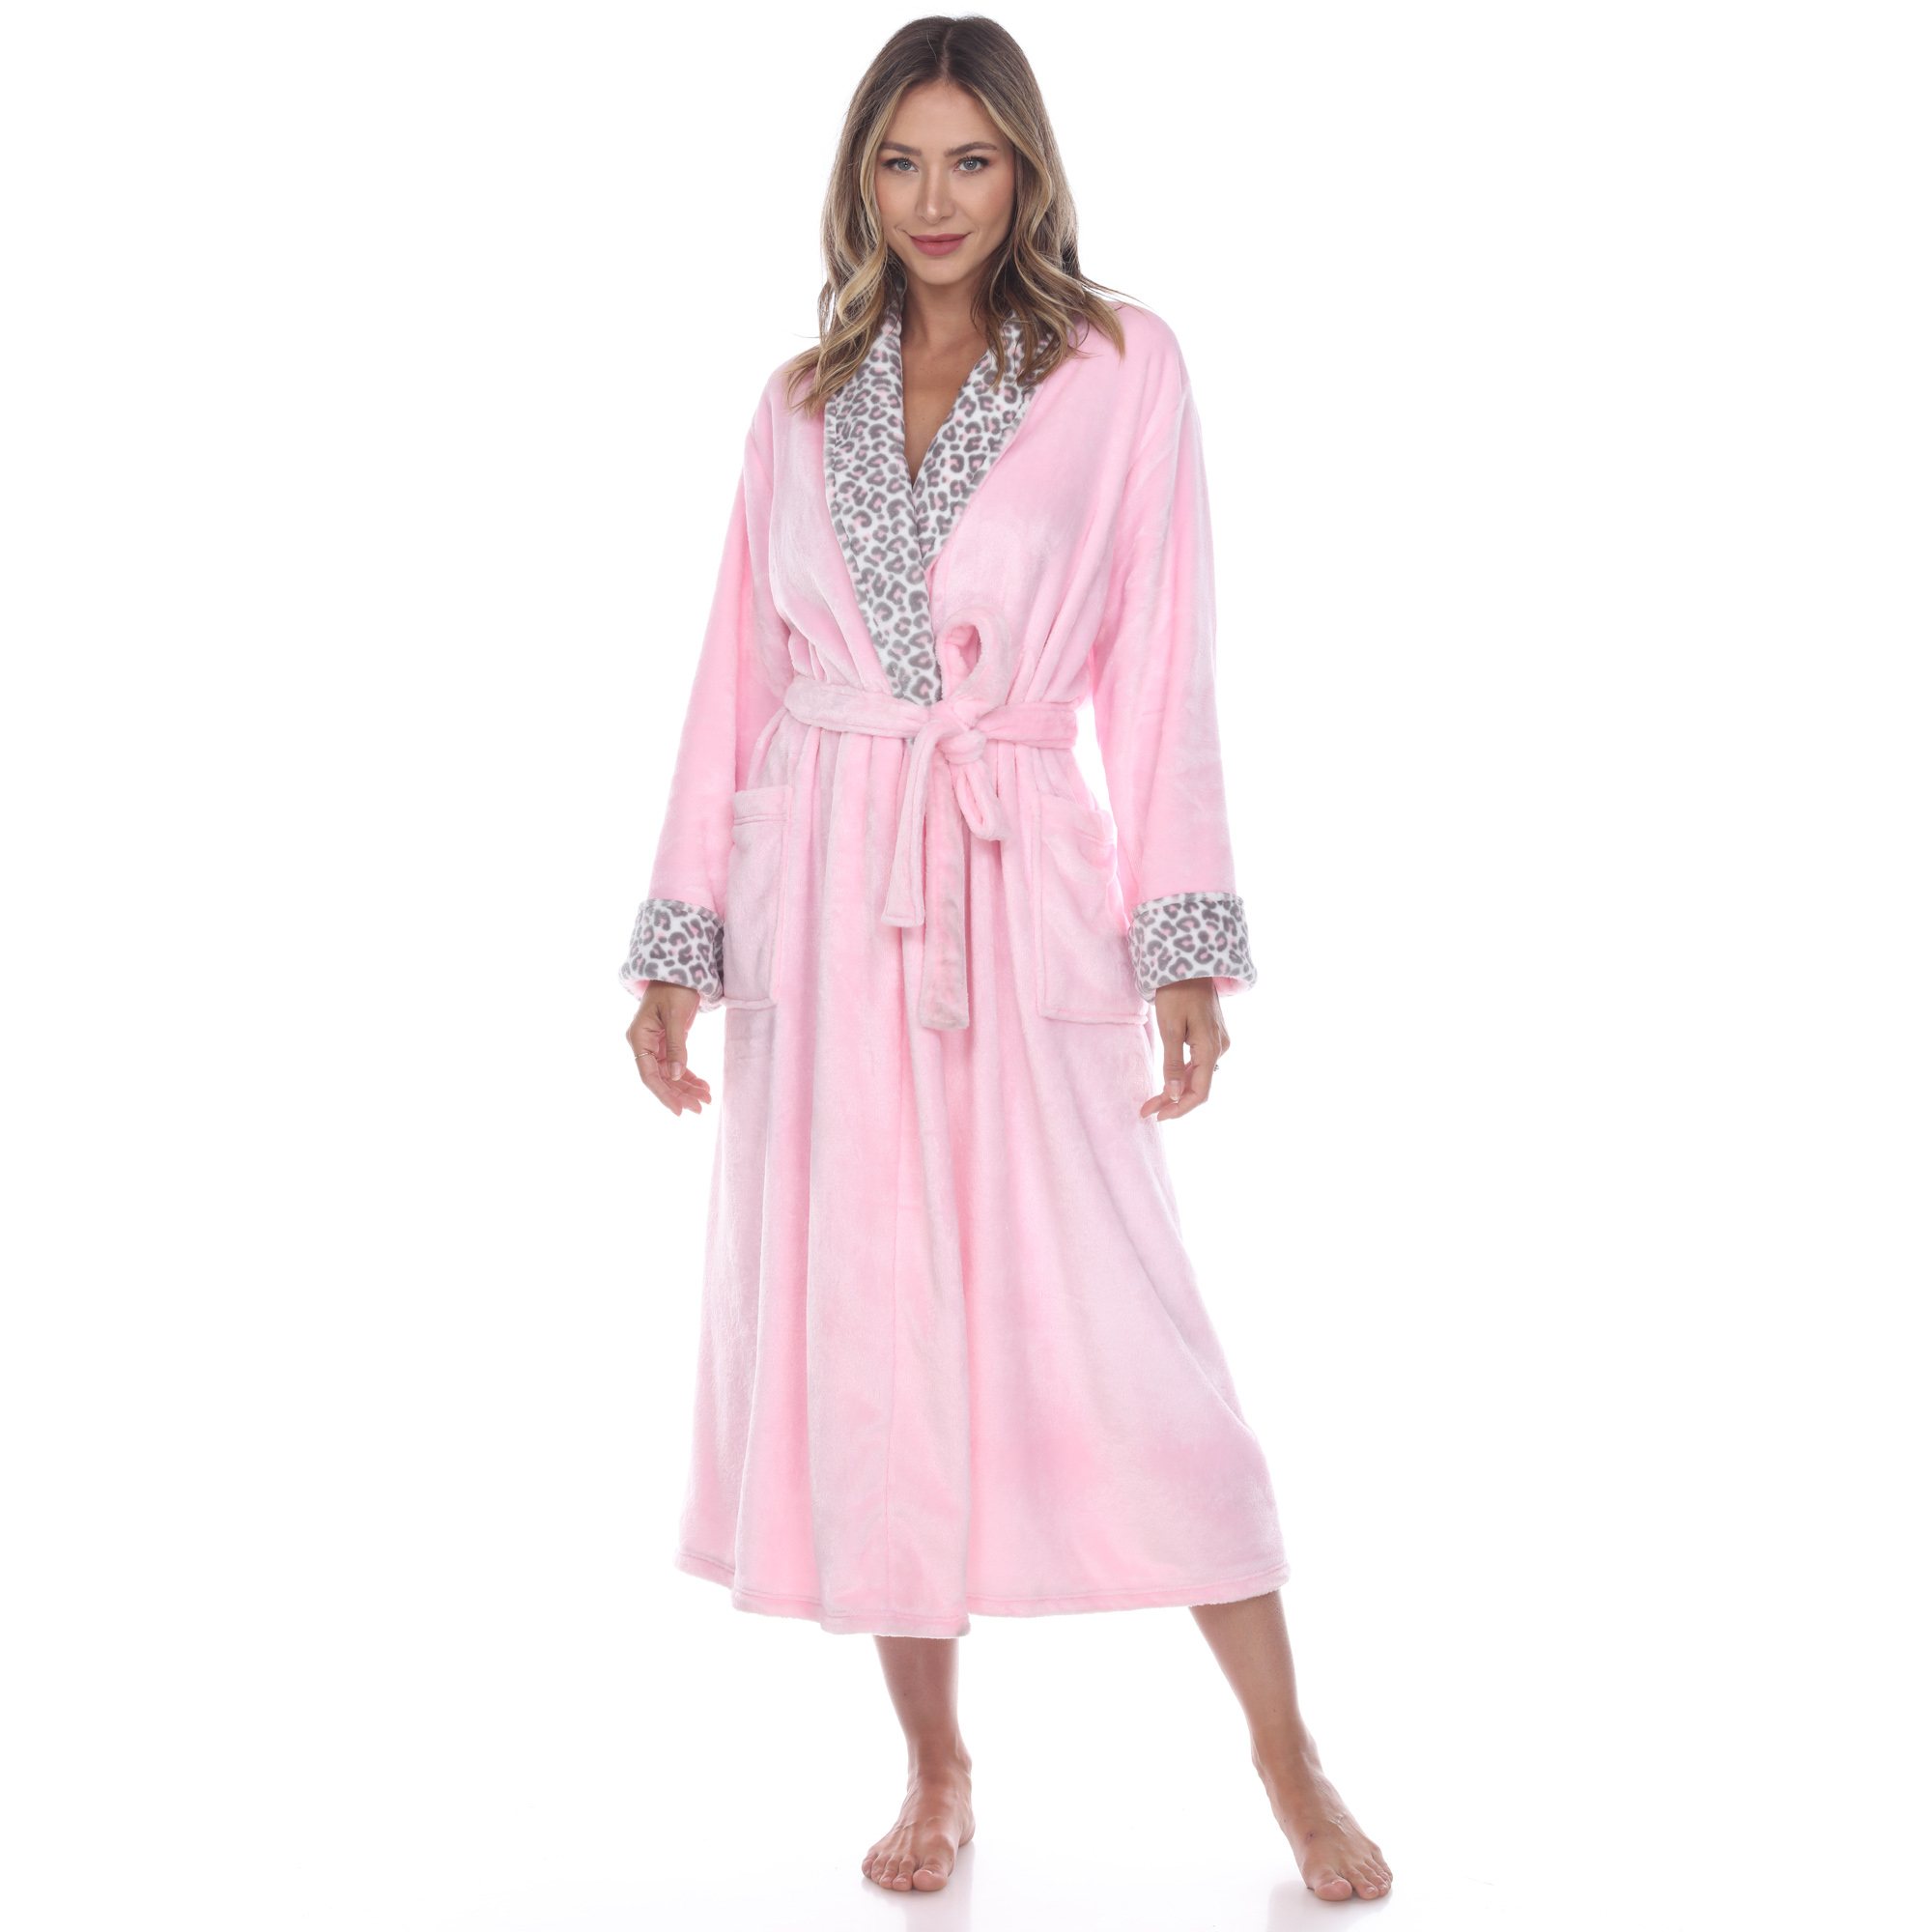 White Mark Women's Cozy Lounge Robe - Pink Leopard, S/M